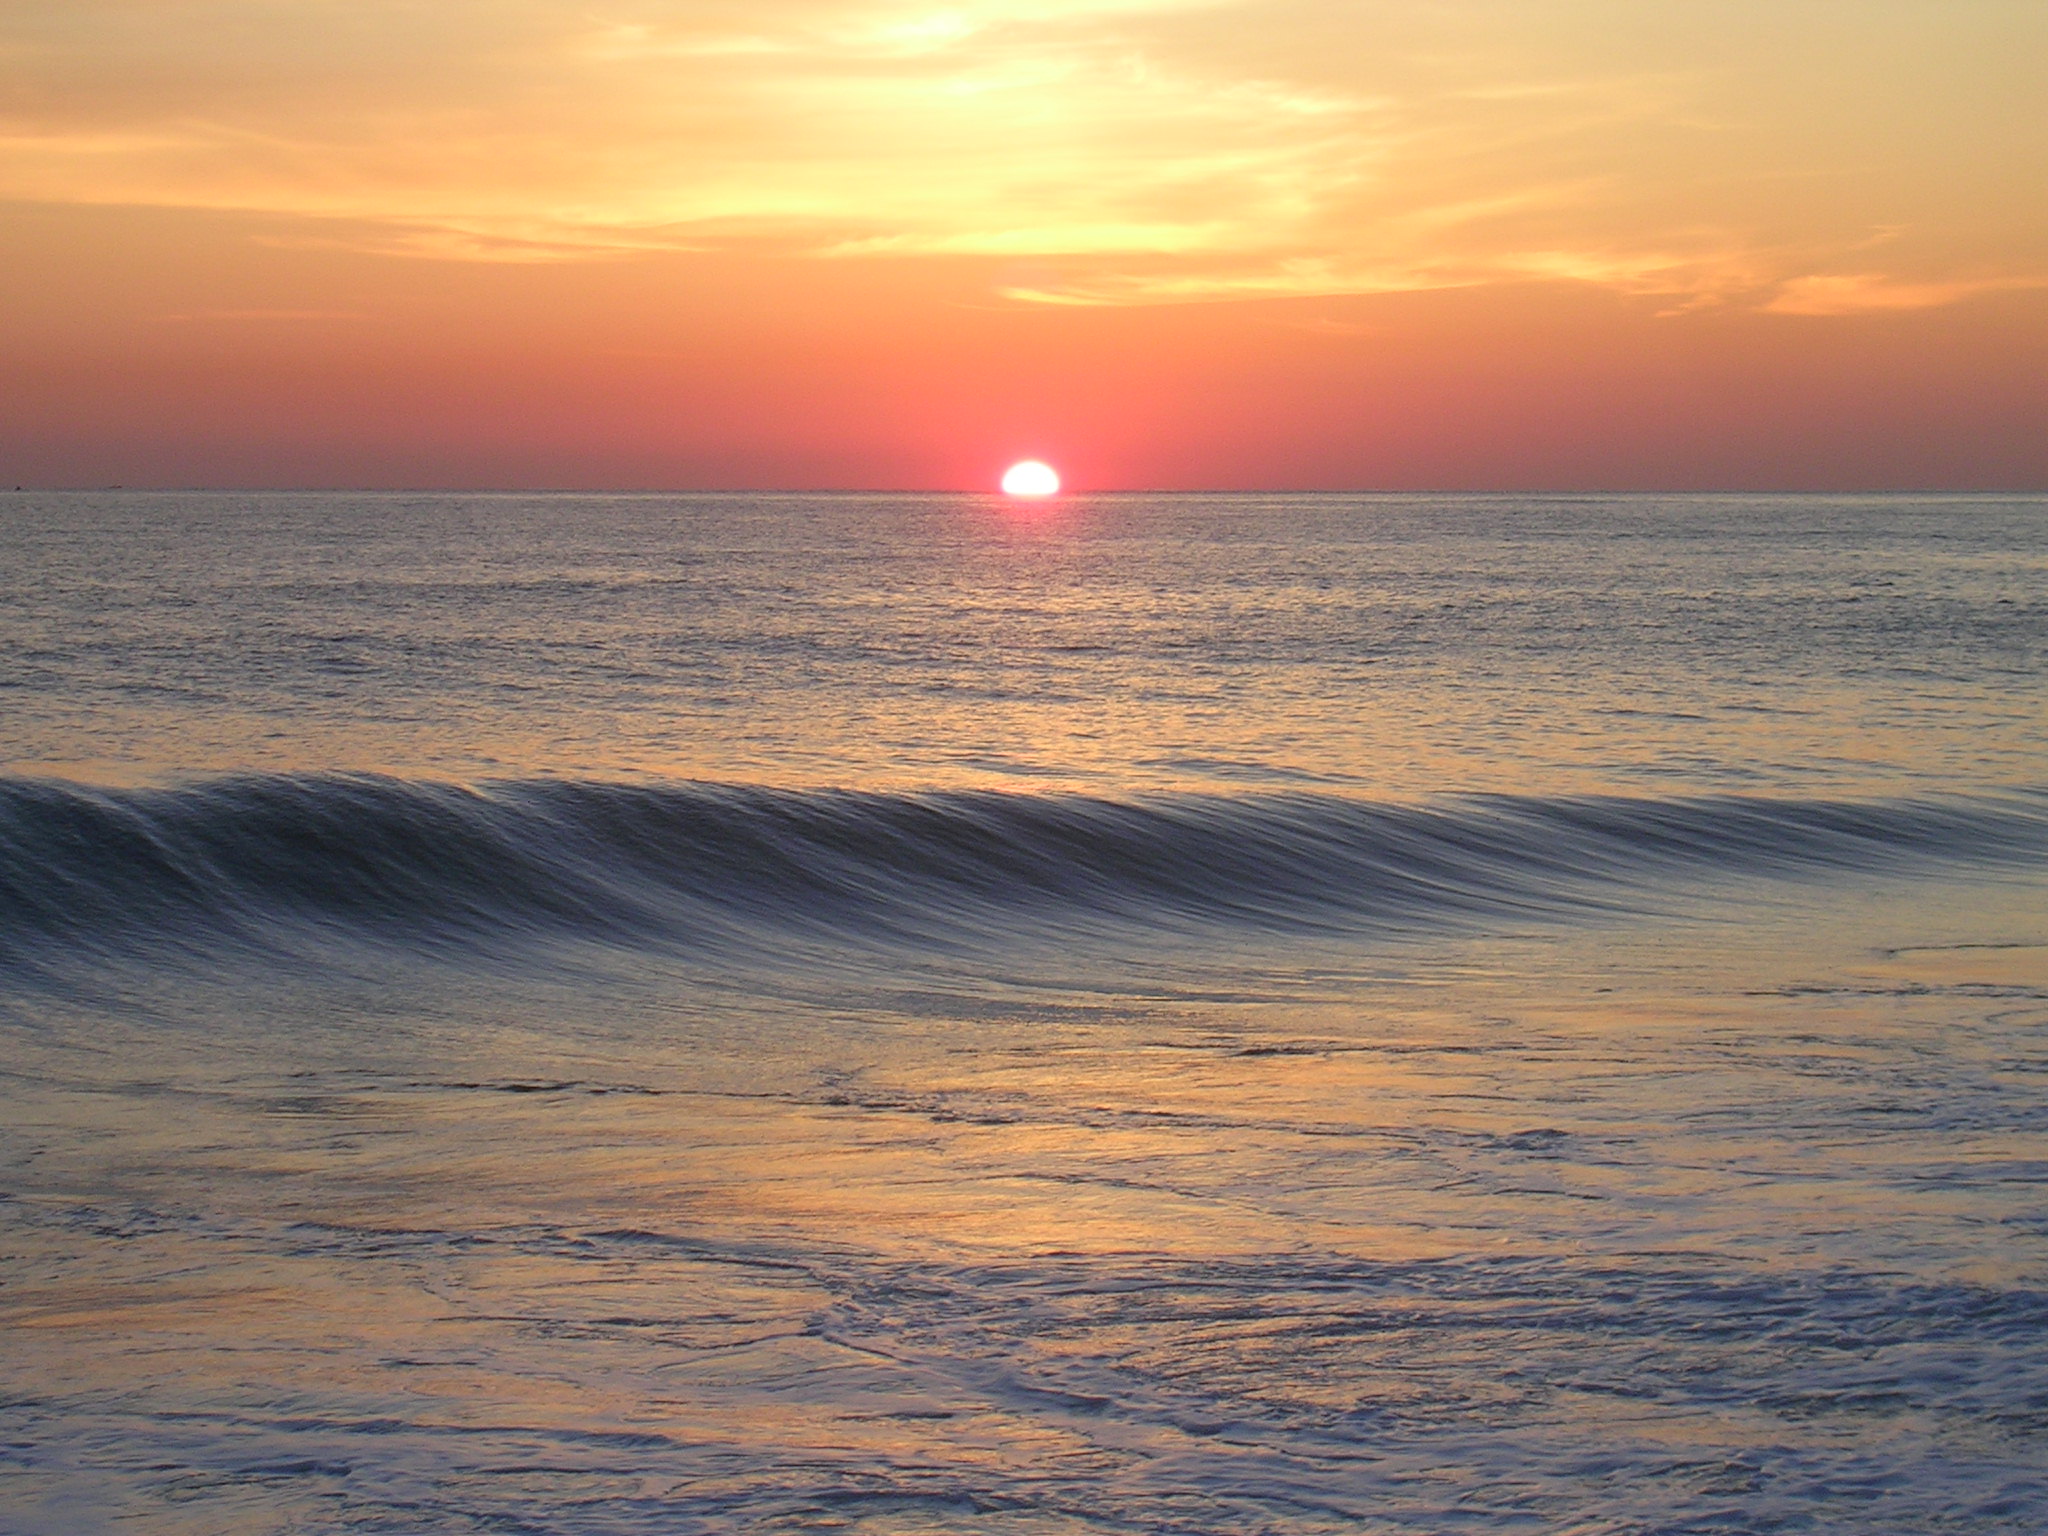 File:Sunrise at ocean.JPG - Wikimedia Commons